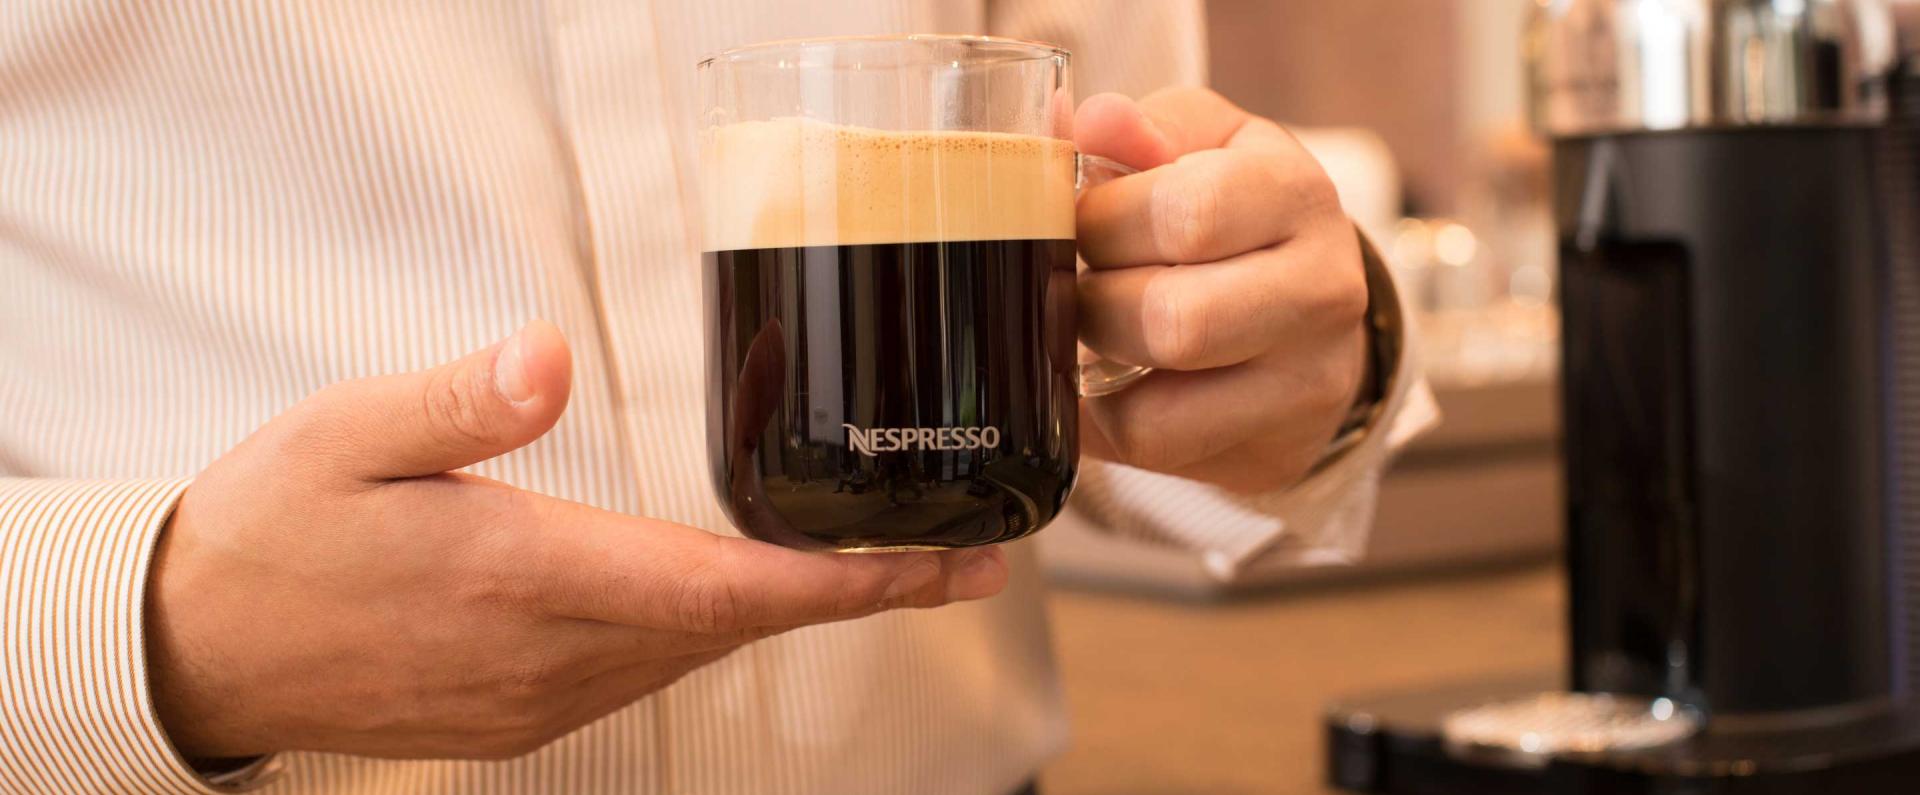 Holding Nespresso mug in hands